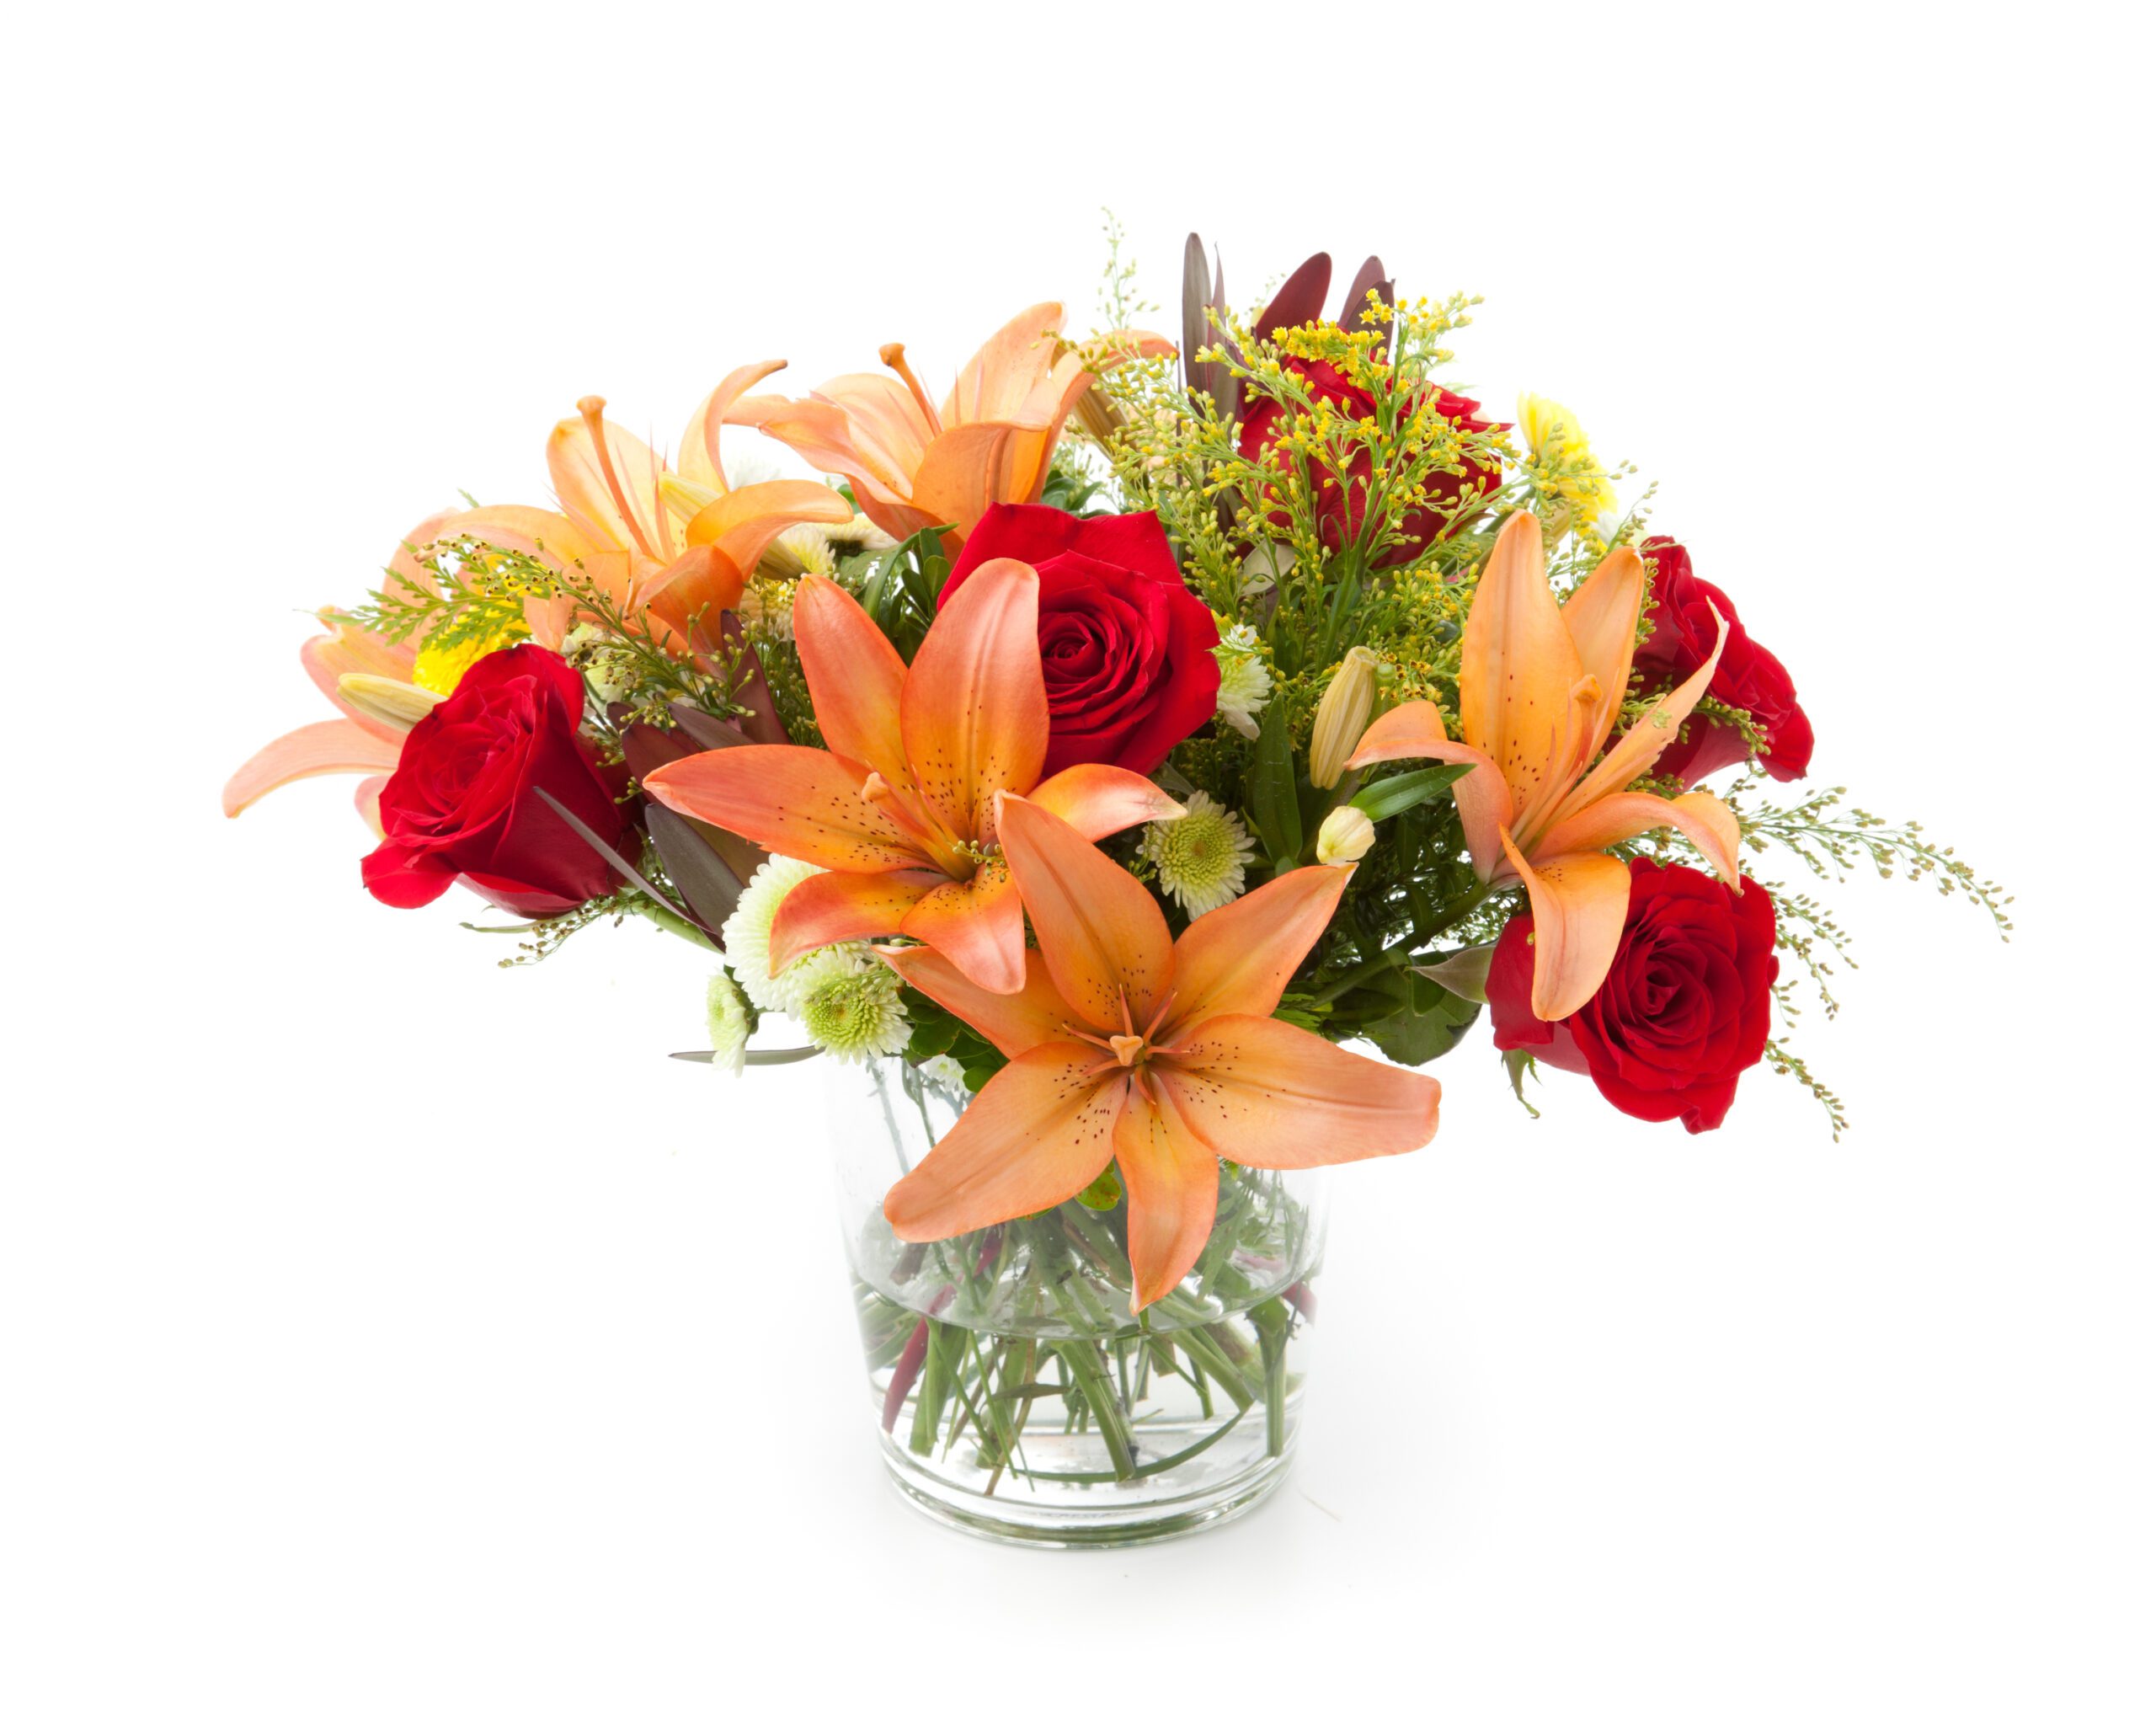 Flower bunch in vase